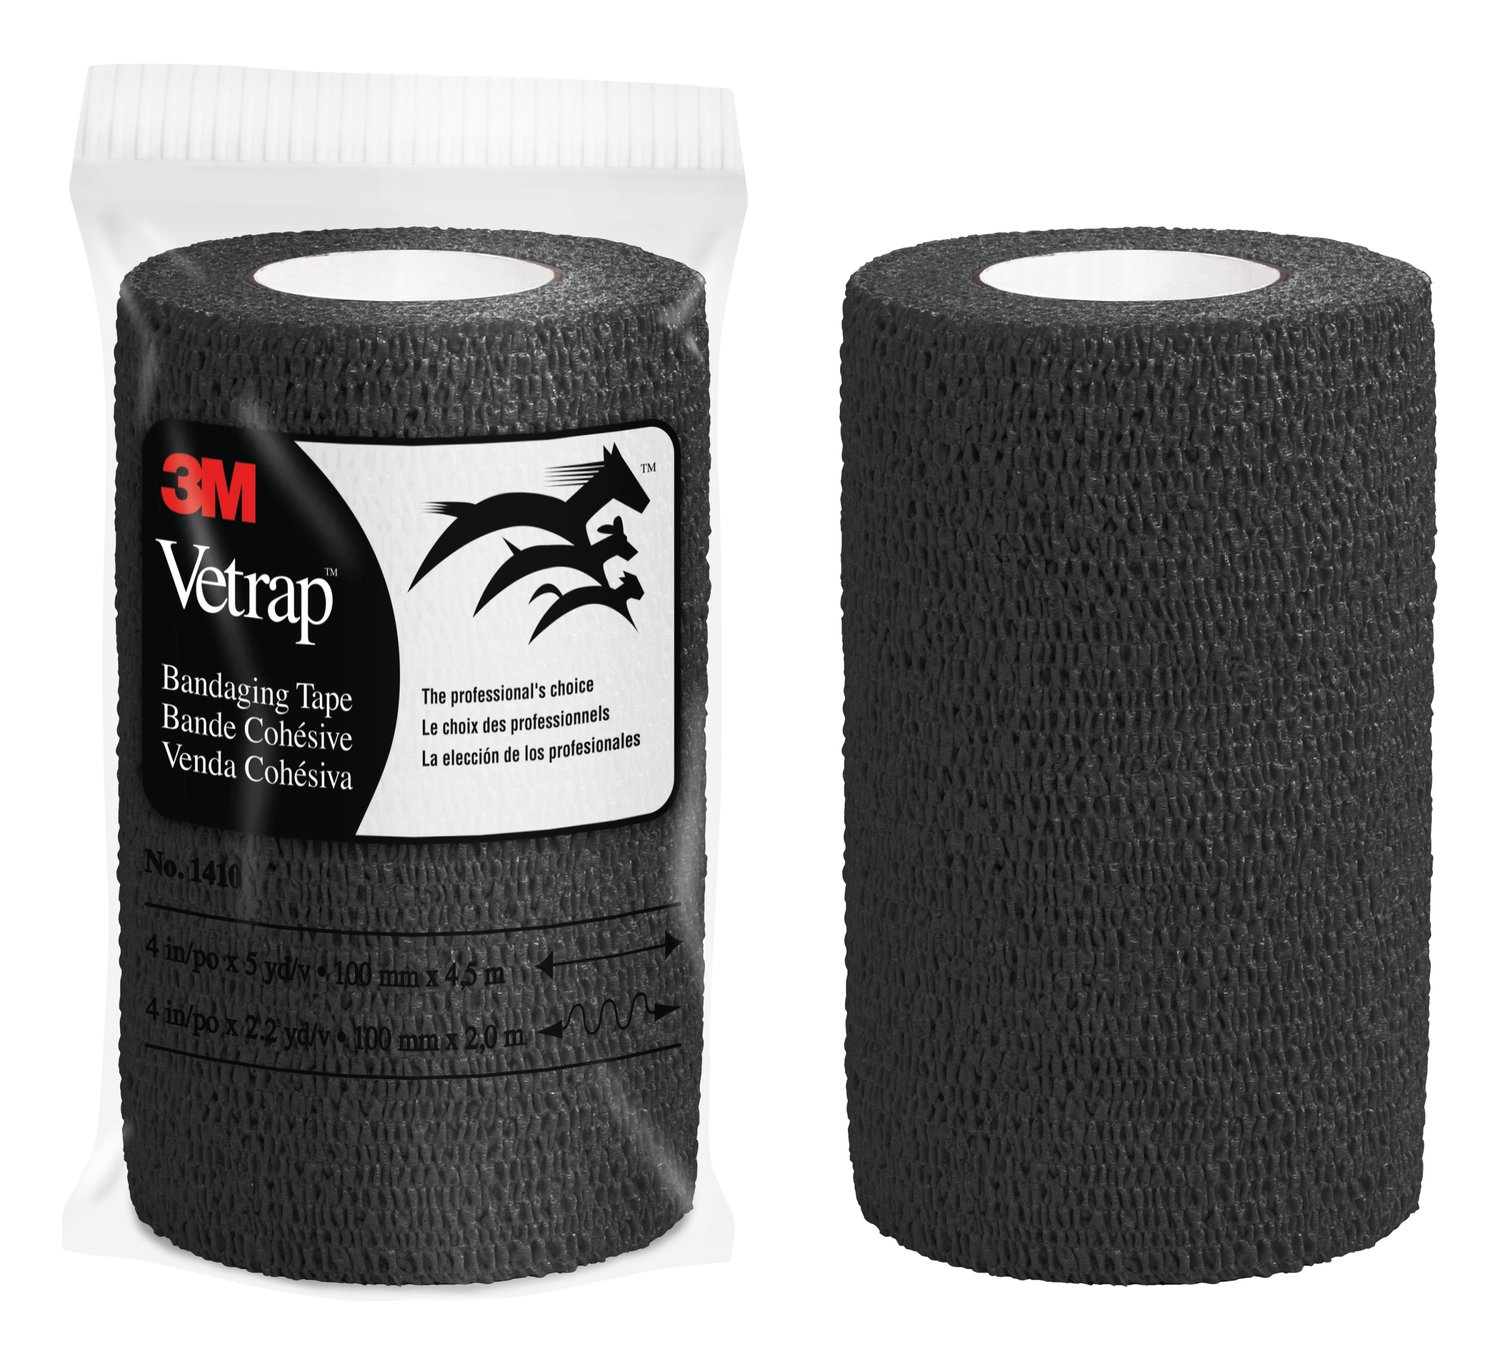 7100295319 - 3M Vetrap Bandaging Tape 1410BK-18, Black, 4 inch (10 cm), 18 Rolls/Case